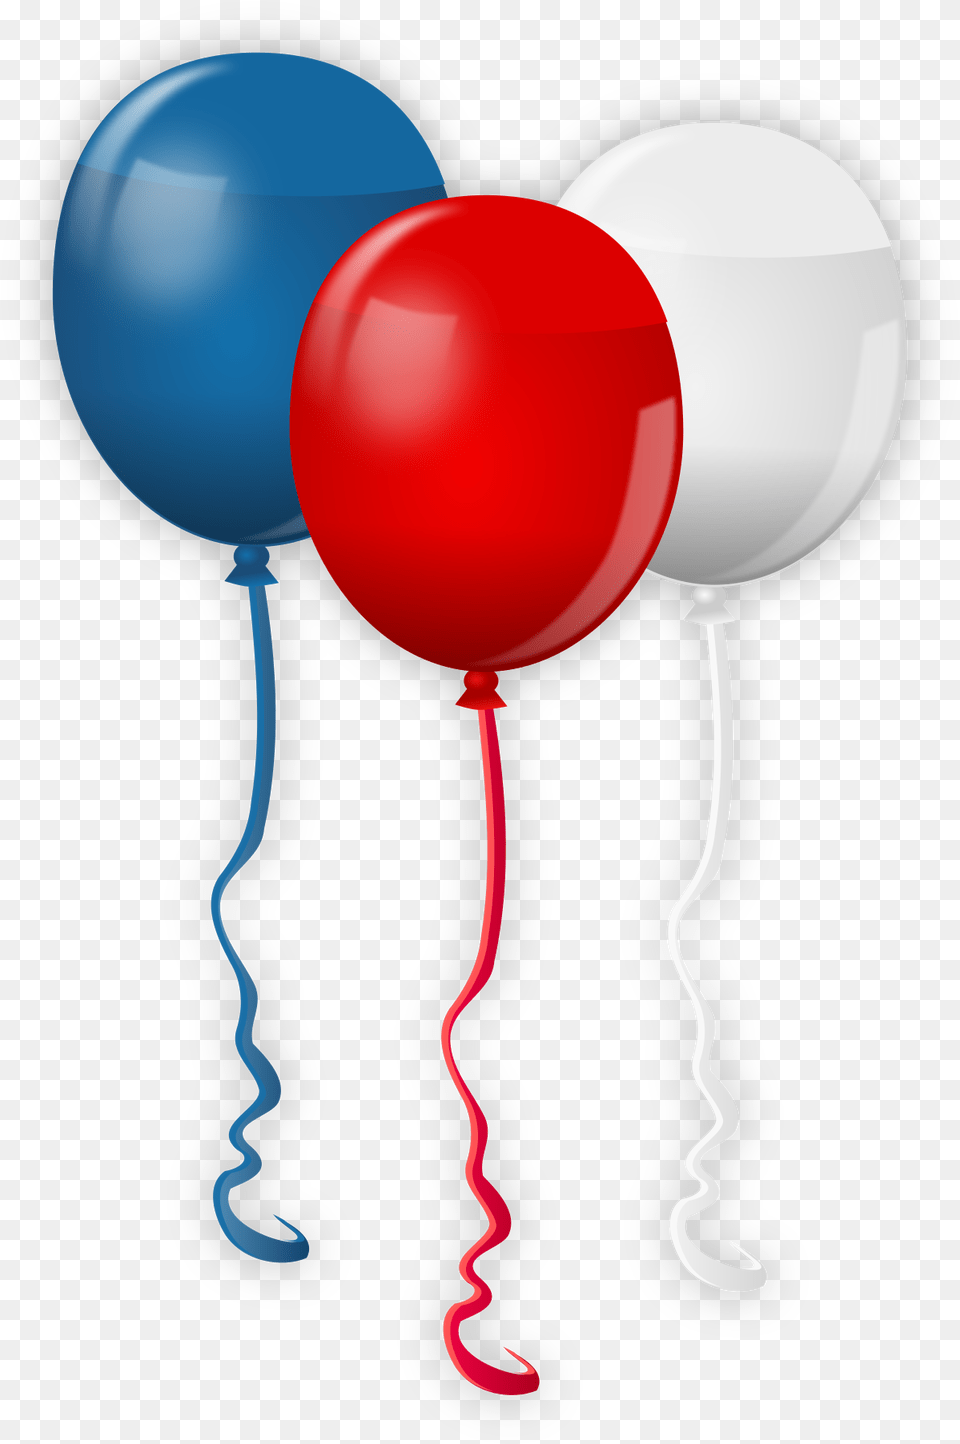 Chevron Arrow Clipart Blue Red White Balloon Free Png